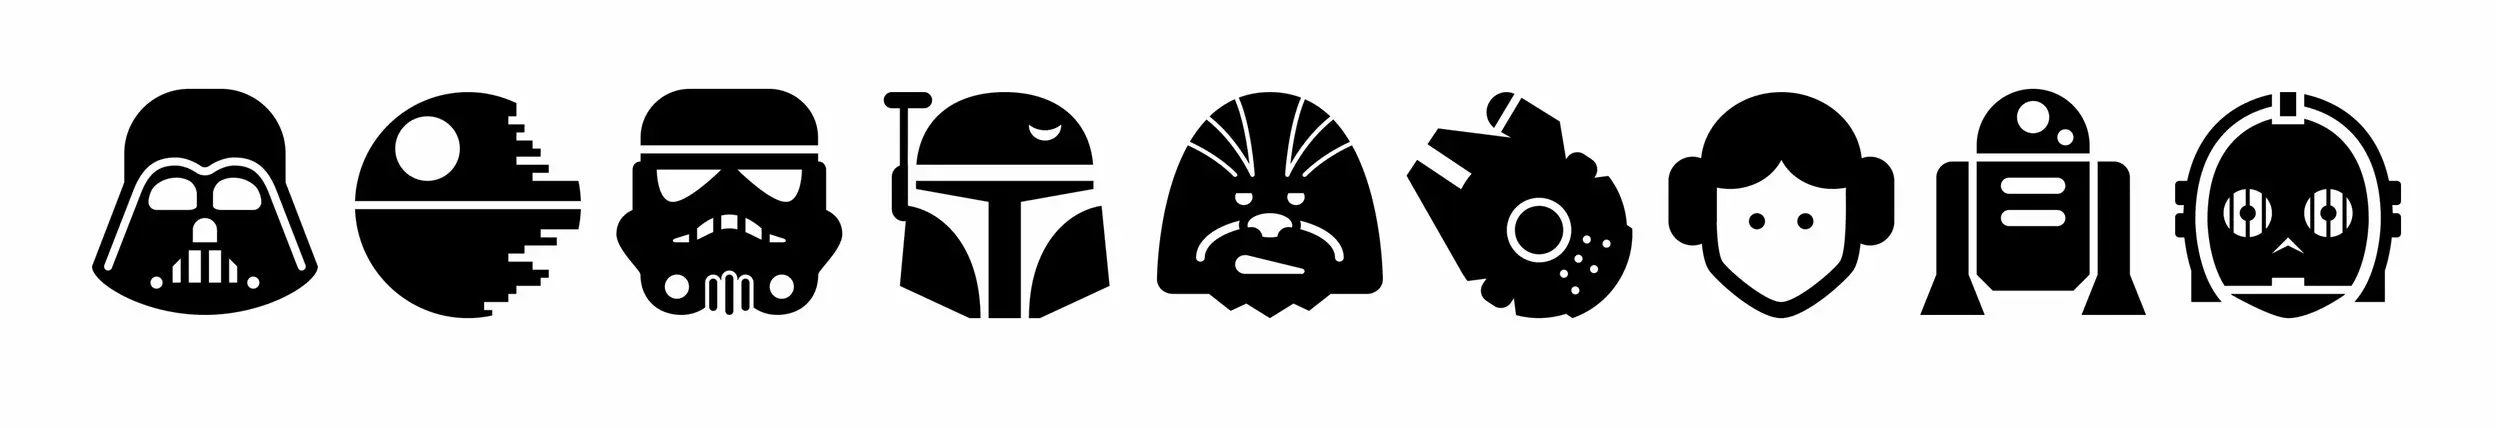 Star Wars icons